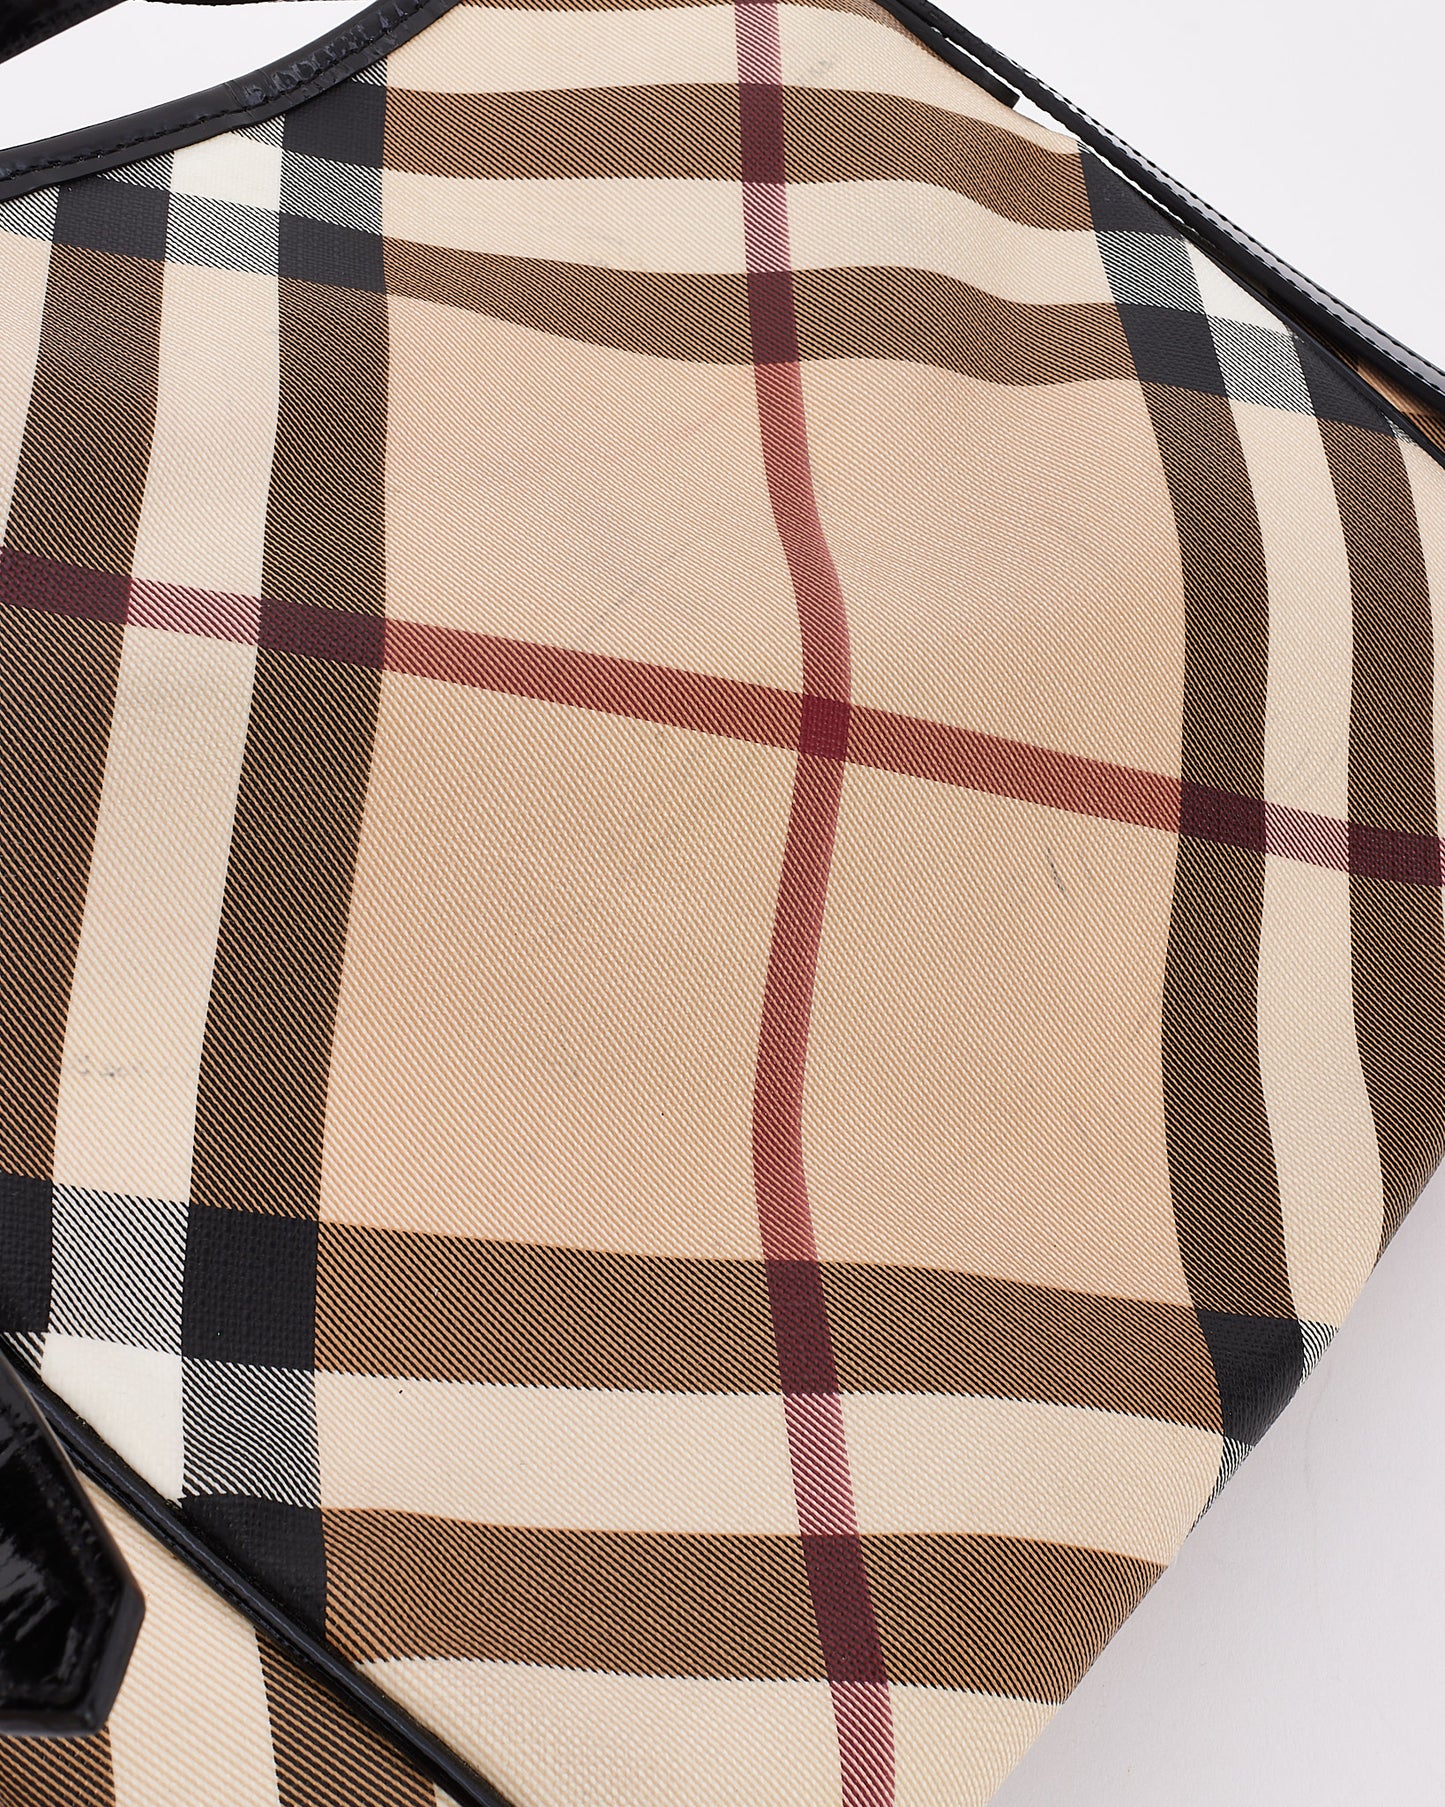 Burberry Beige Canvas & Patent Leather Check Print Shoulder Bag